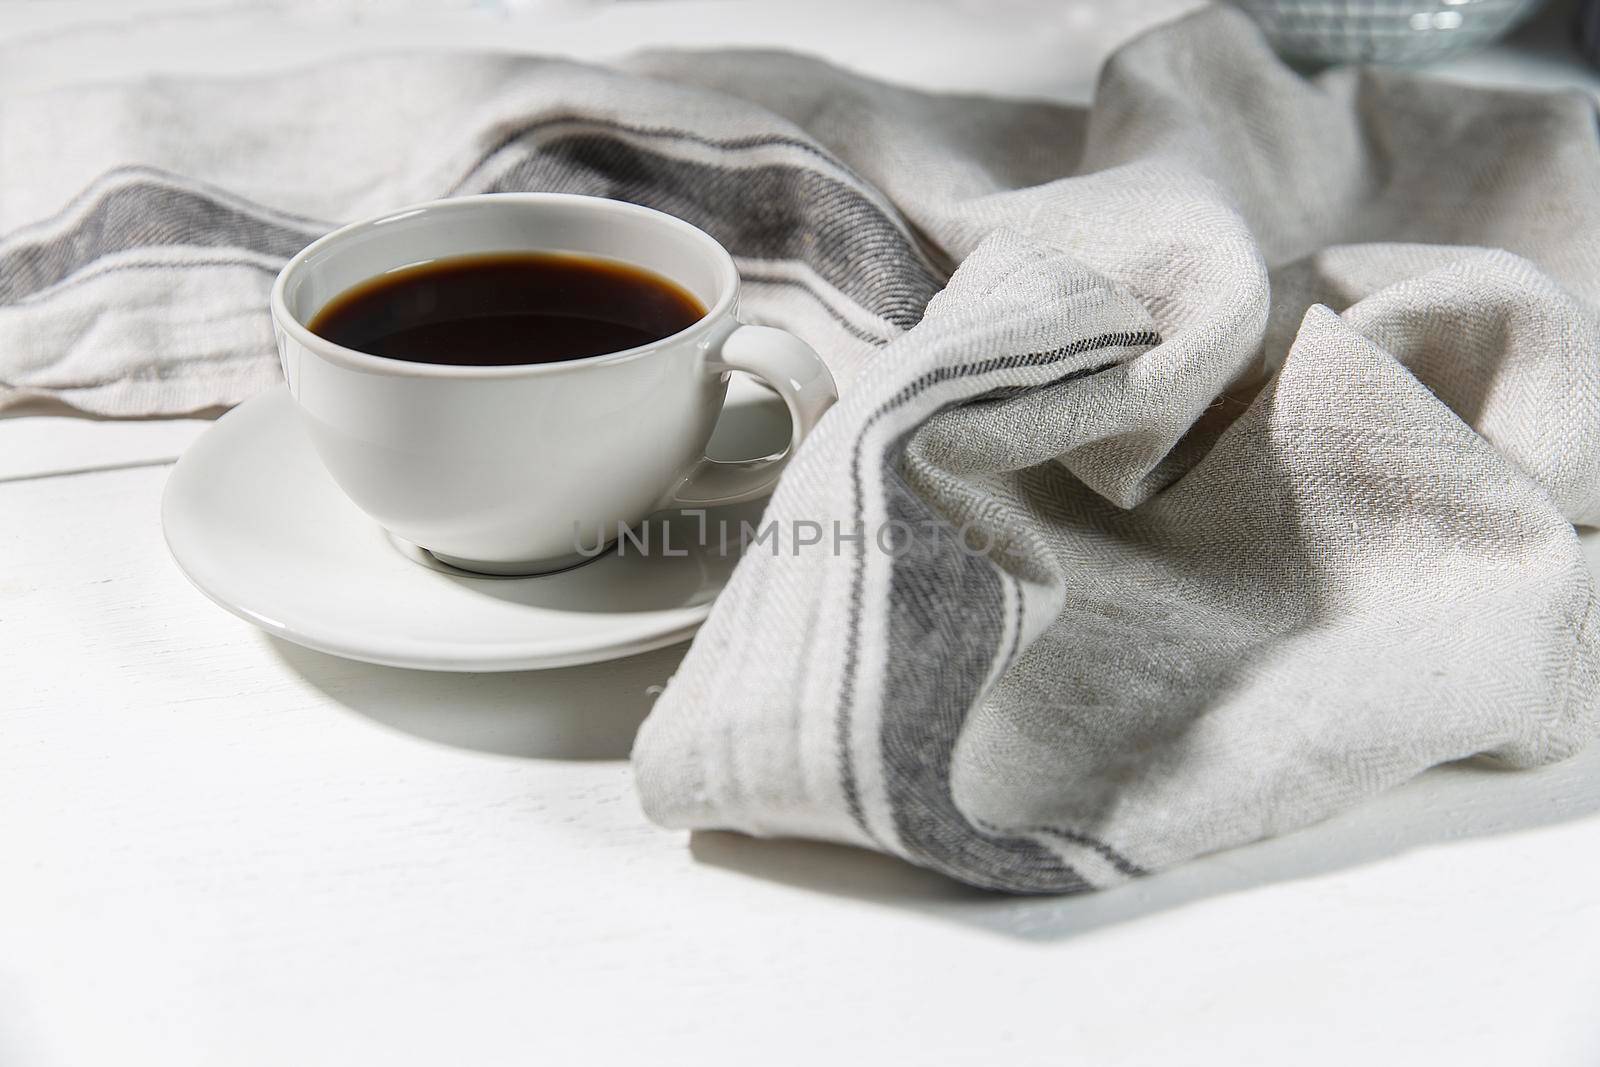 Cup of tea with napkin on white background by elenarostunova